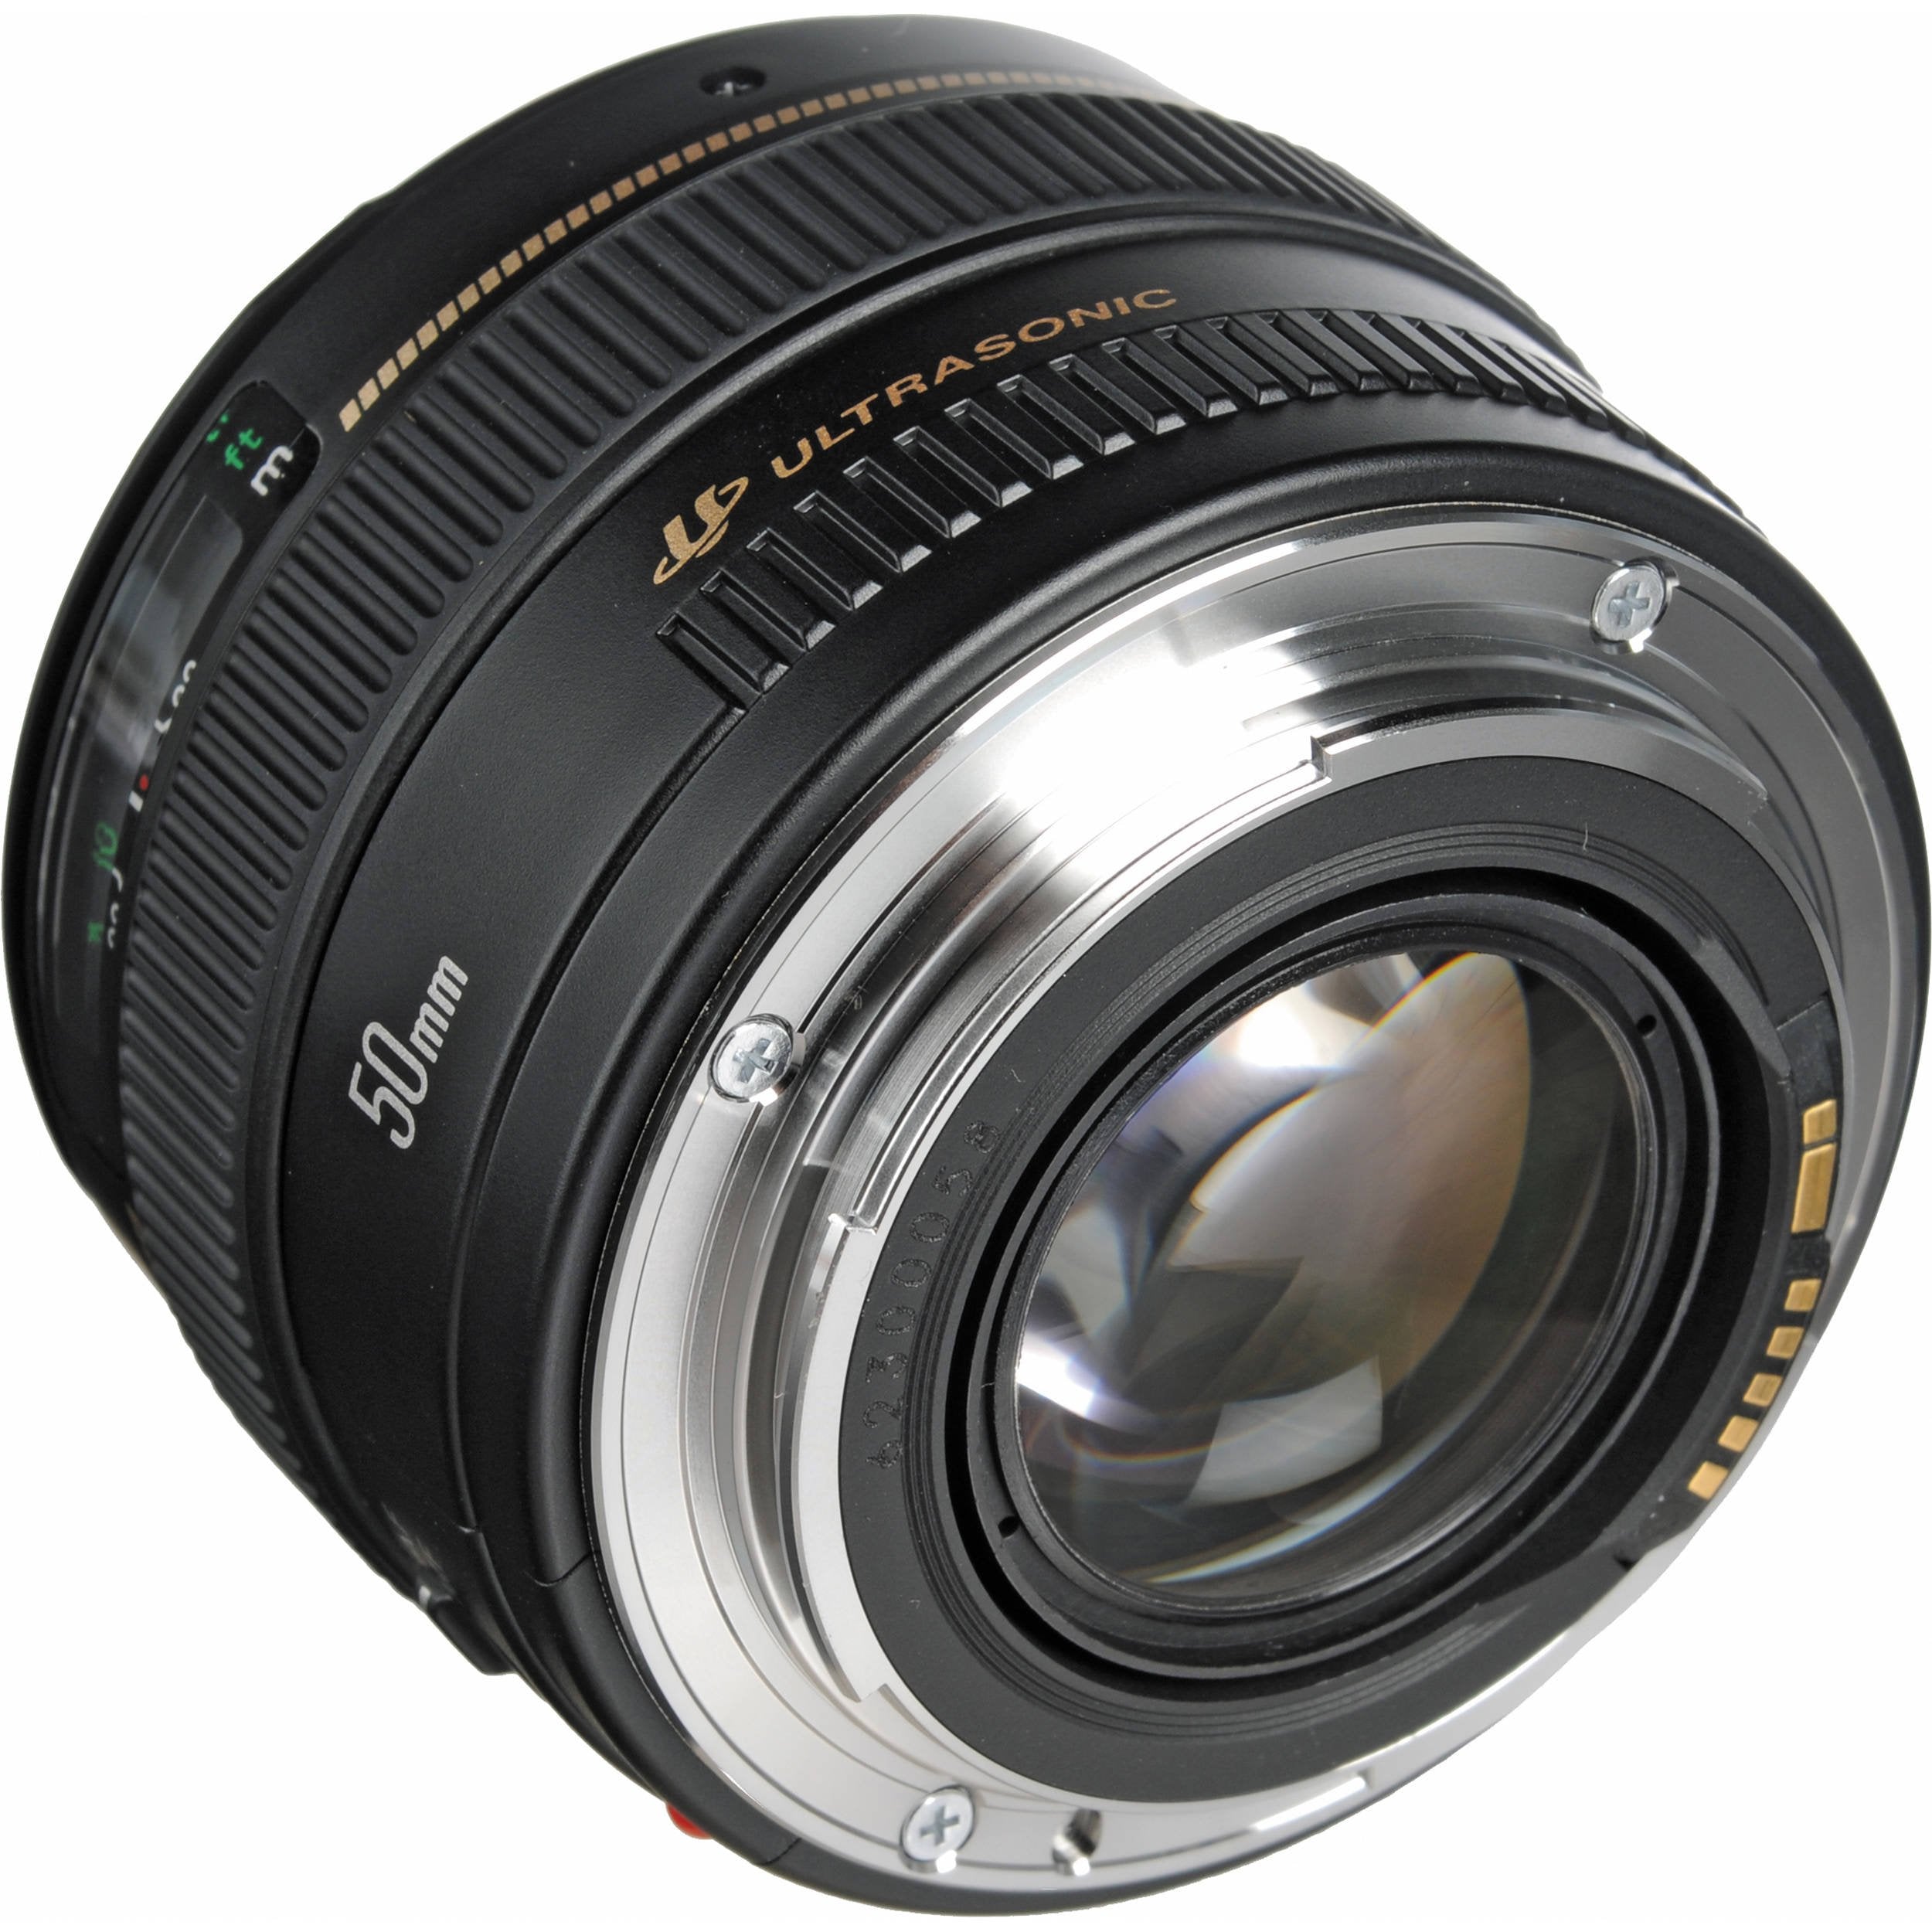 Canon EF 50 1.4 USM 58MM Lens (International Model) + Cleaning Kit